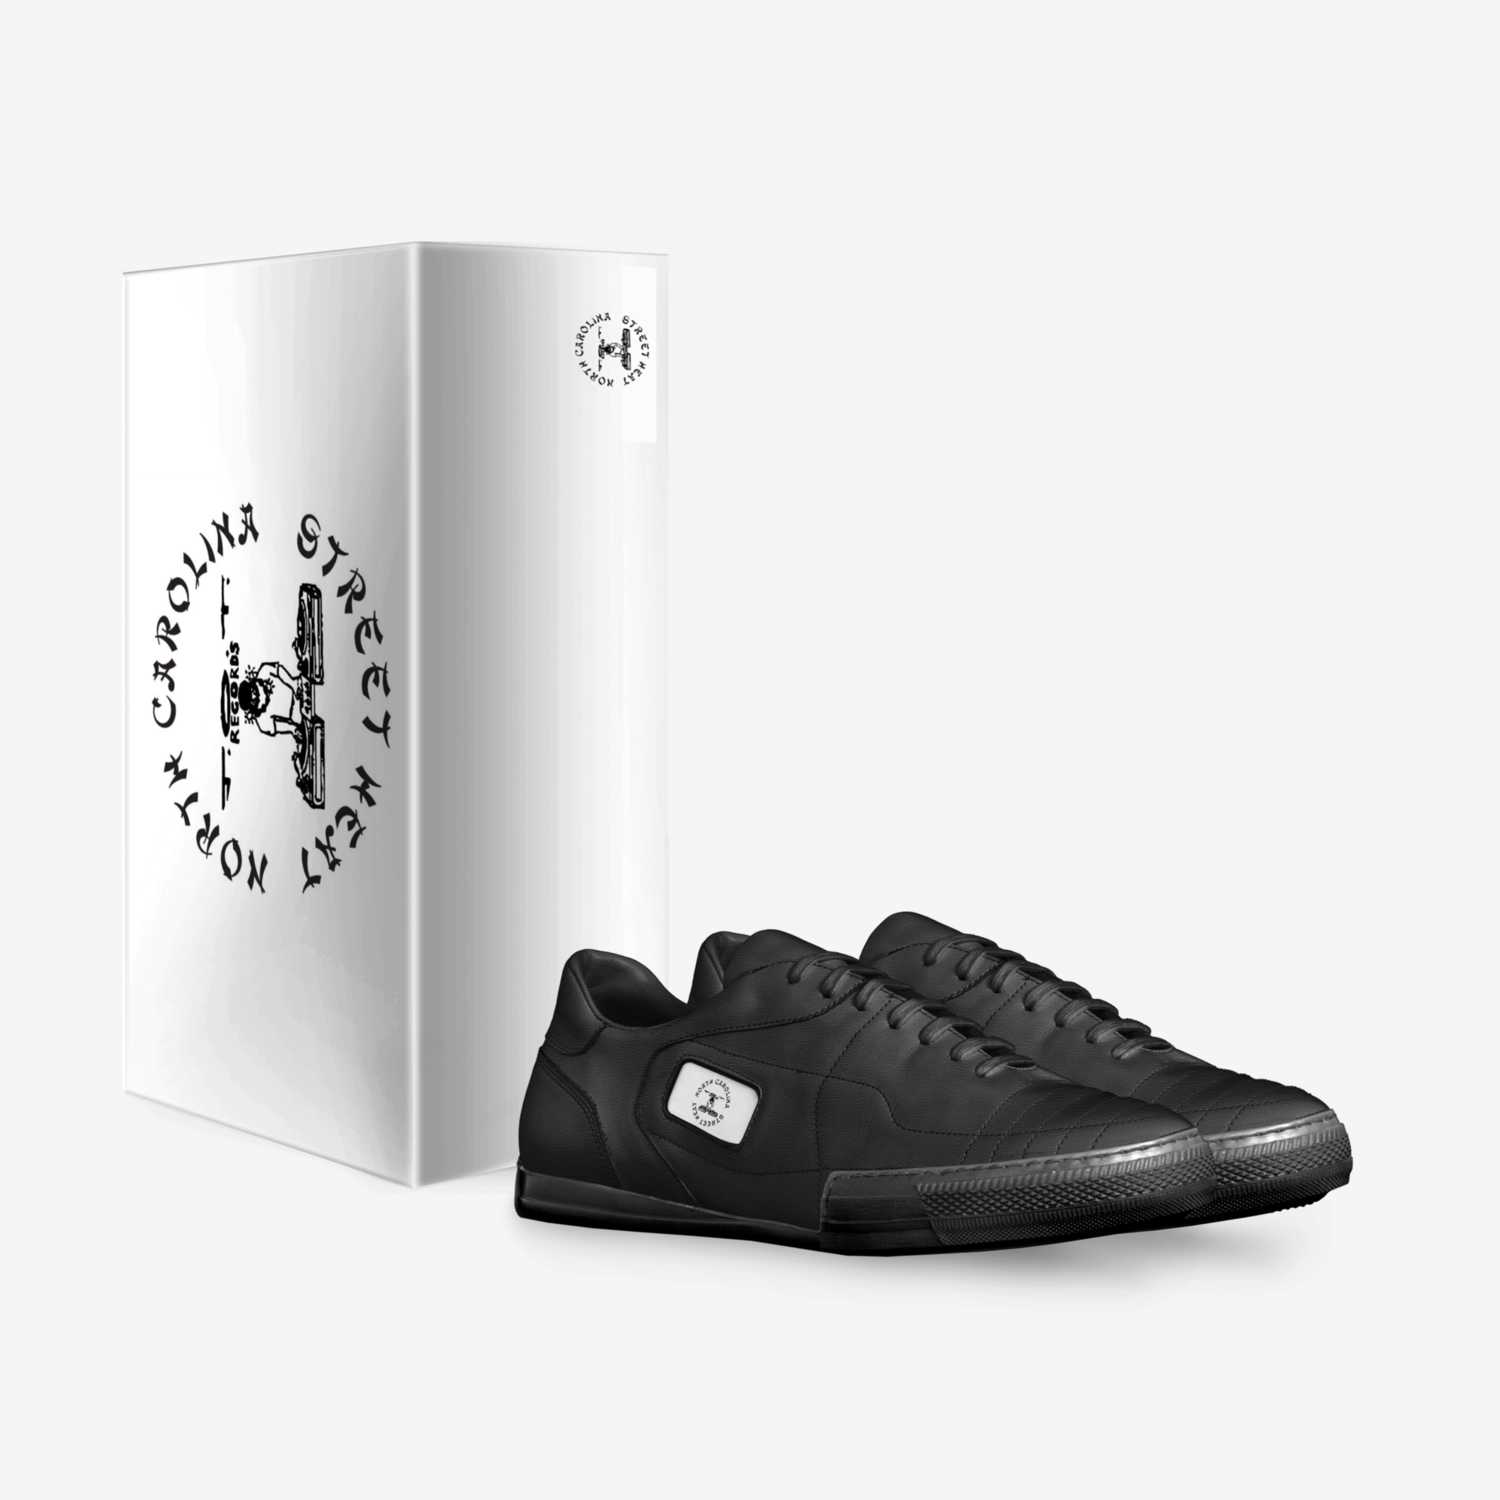 GRANDE GATO GEAR custom made in Italy shoes by Grande Gato | Box view